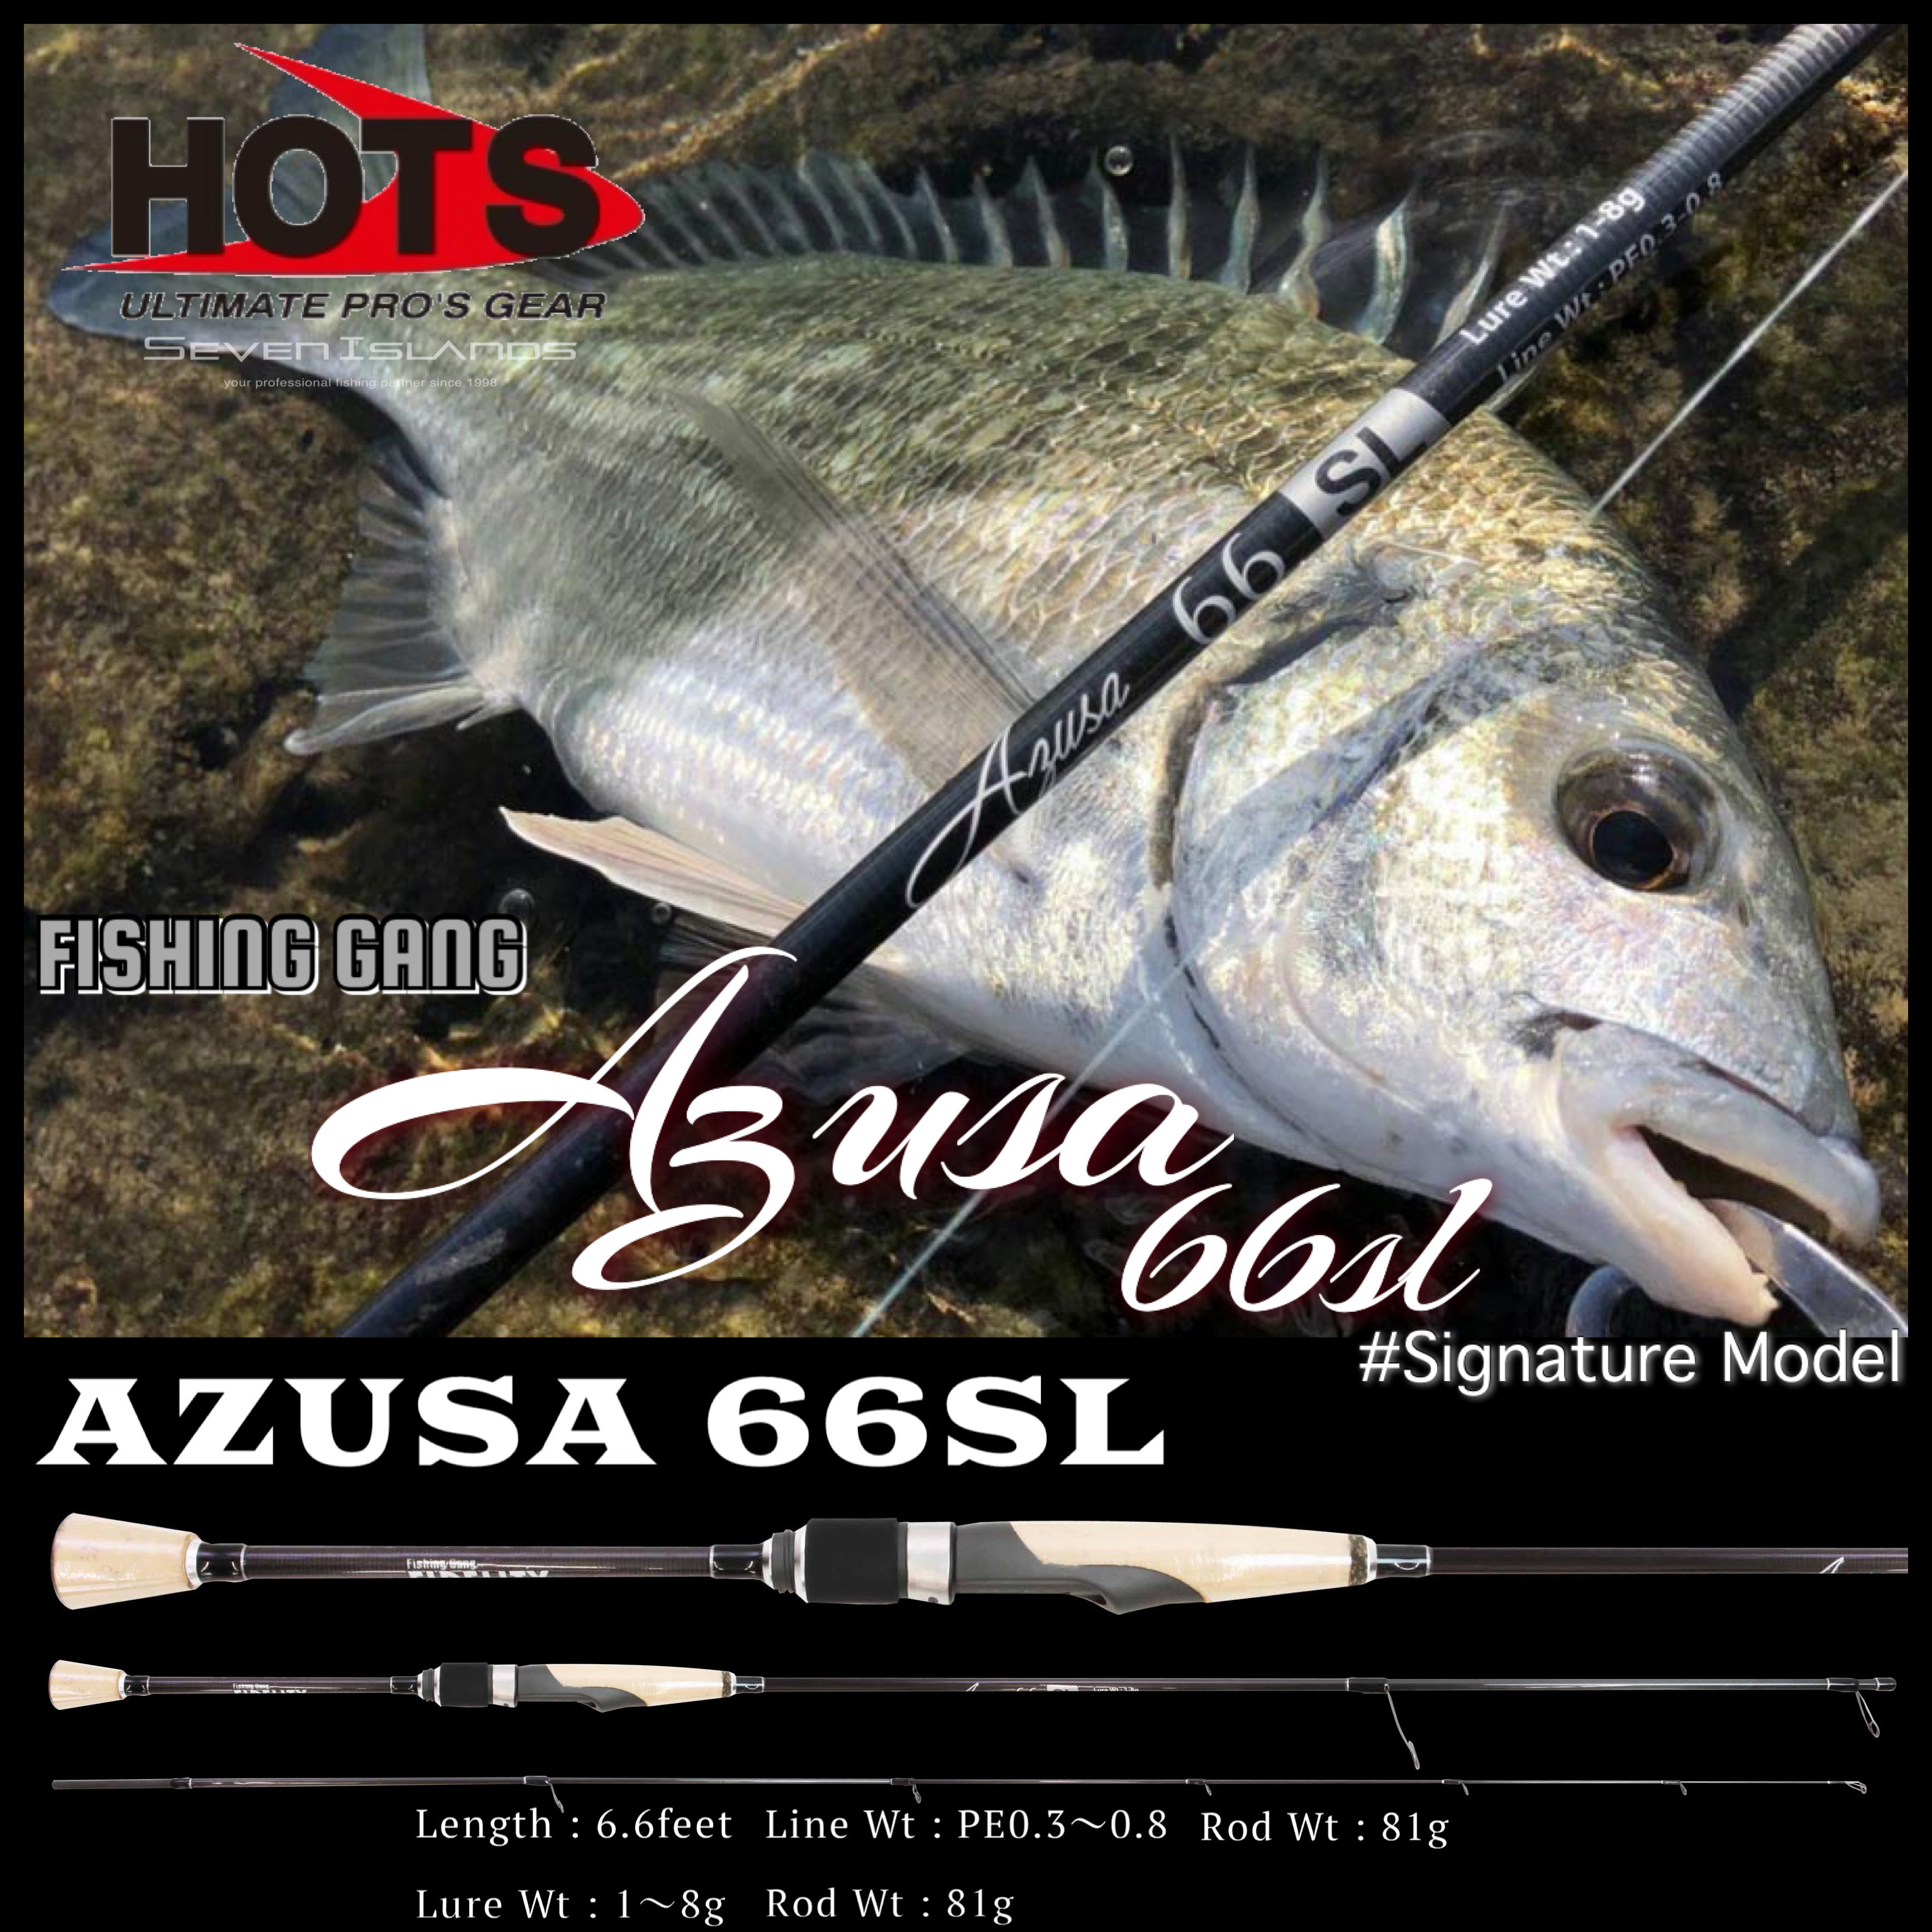 HOTS FISHING GANG AZUSA 66SL CASTING ROD